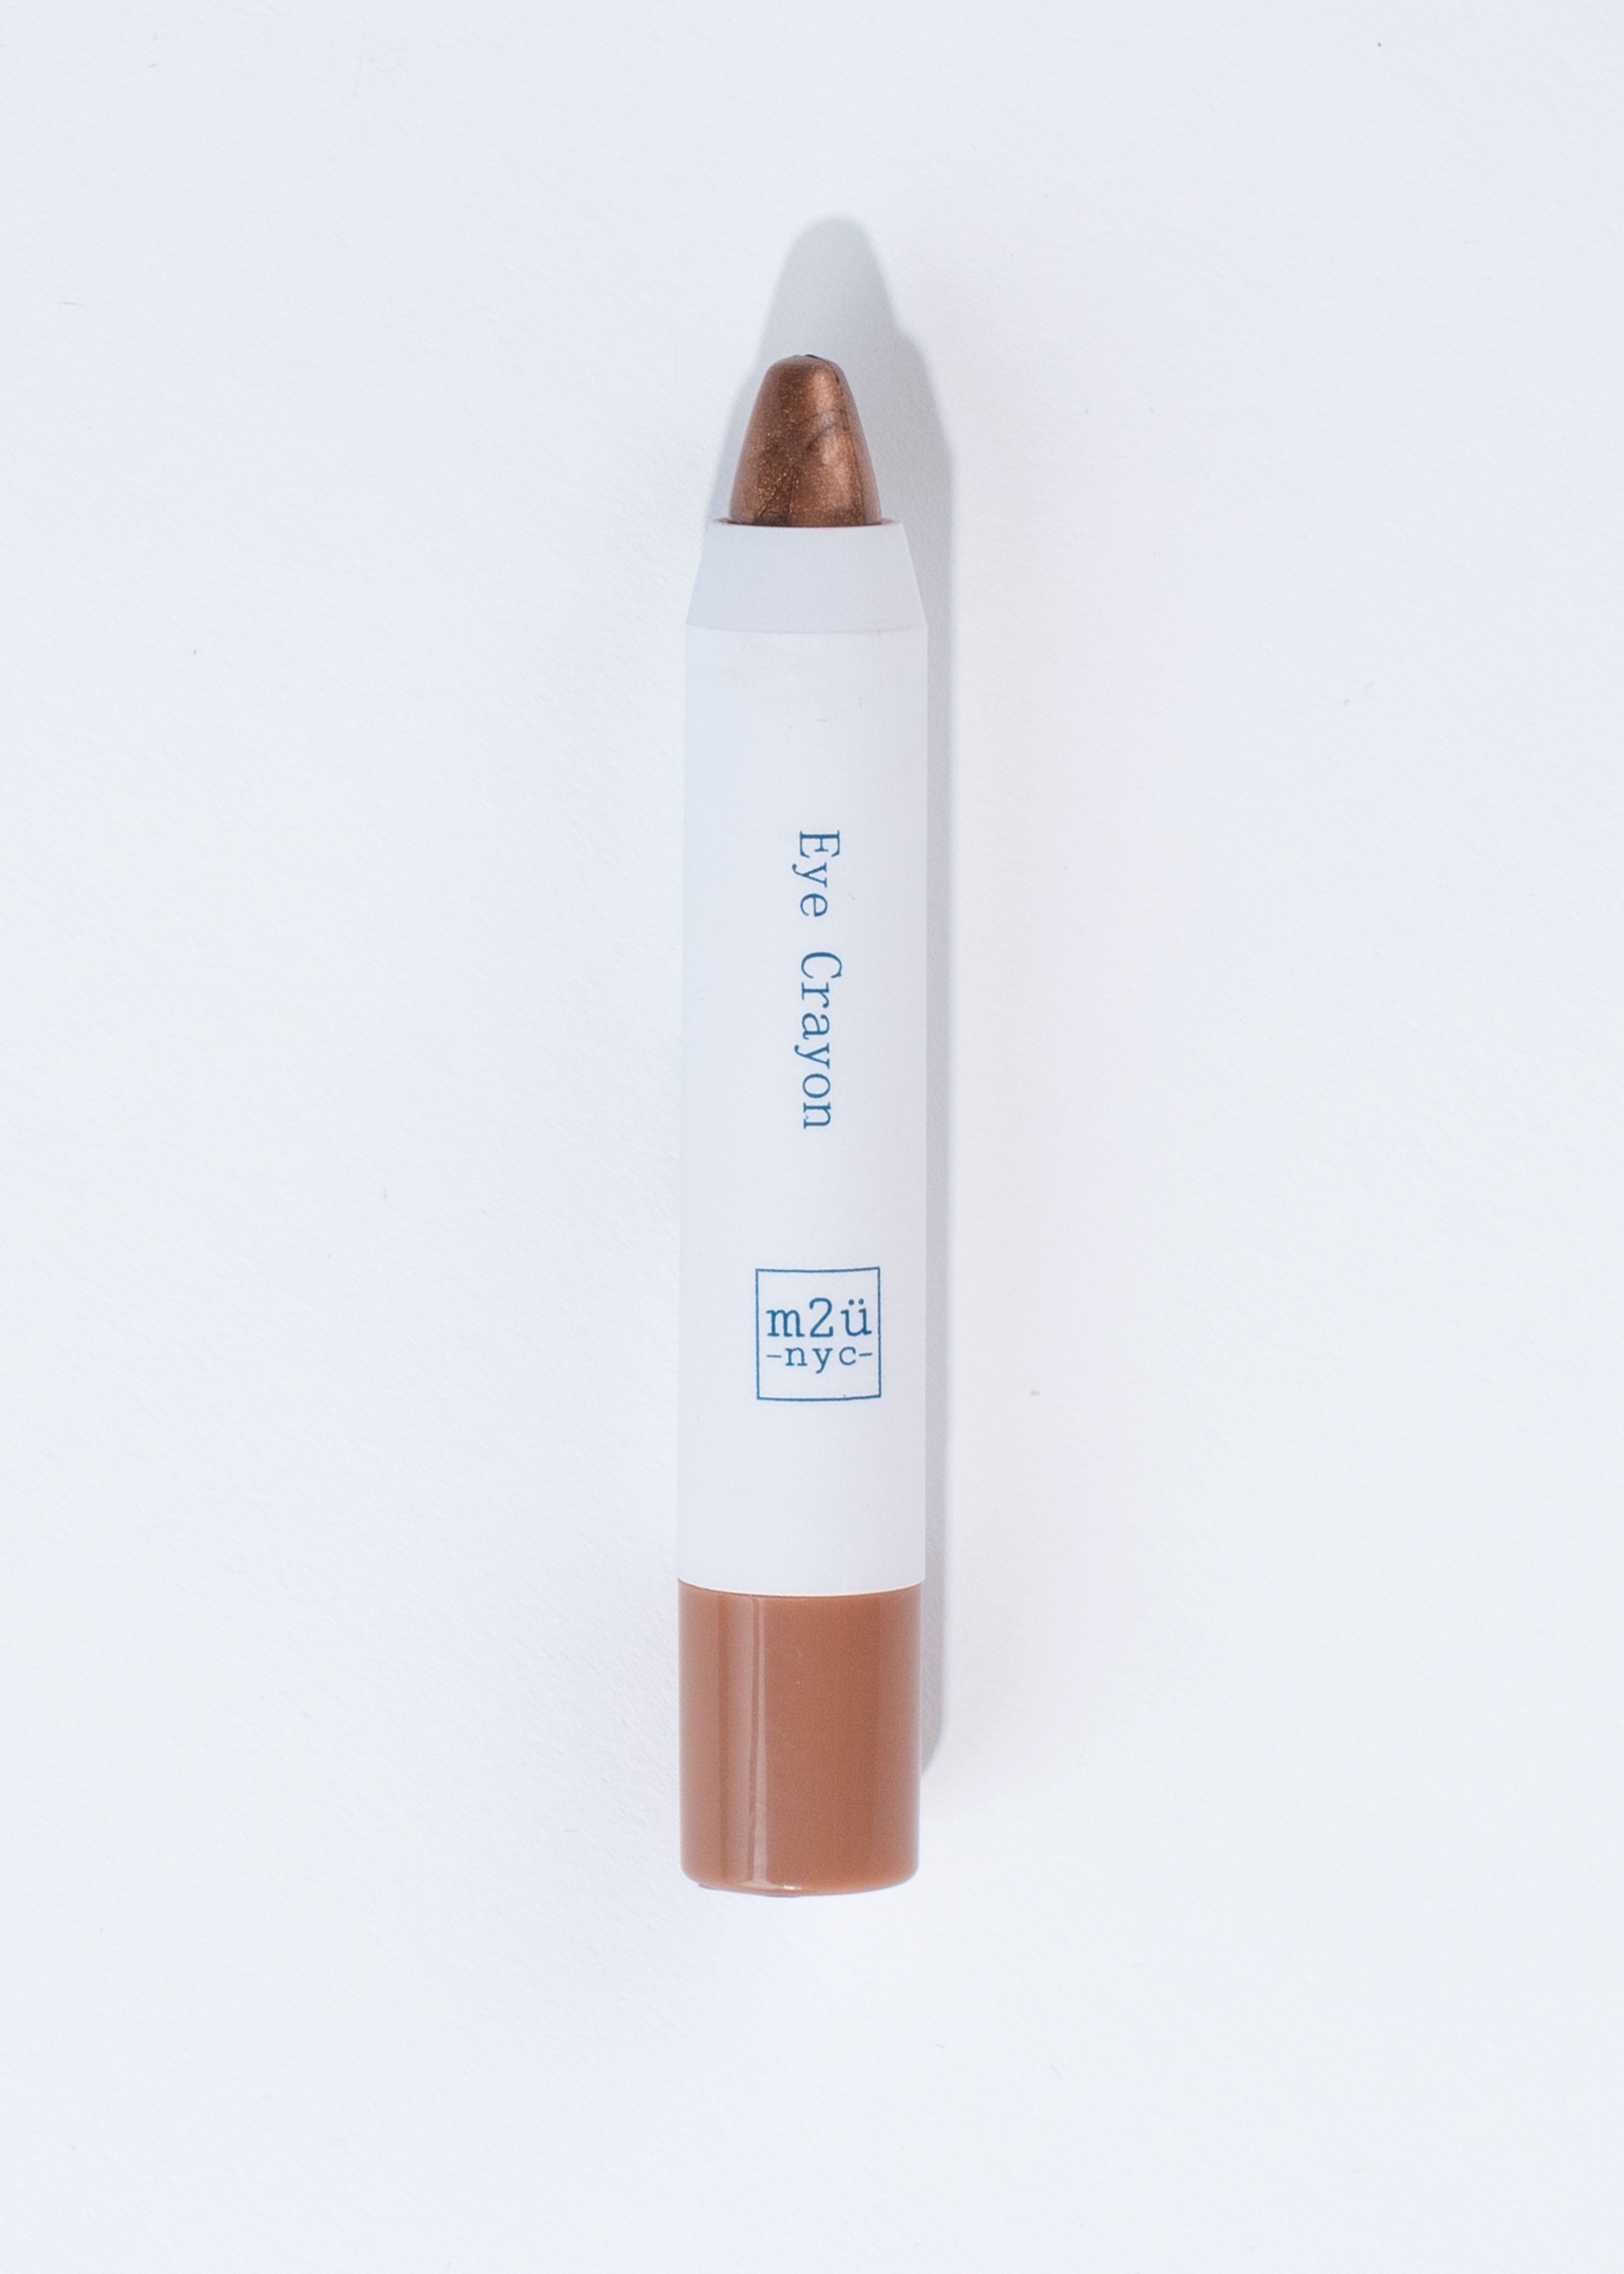 pencil-like eyeshadow crayon in shade copper storm